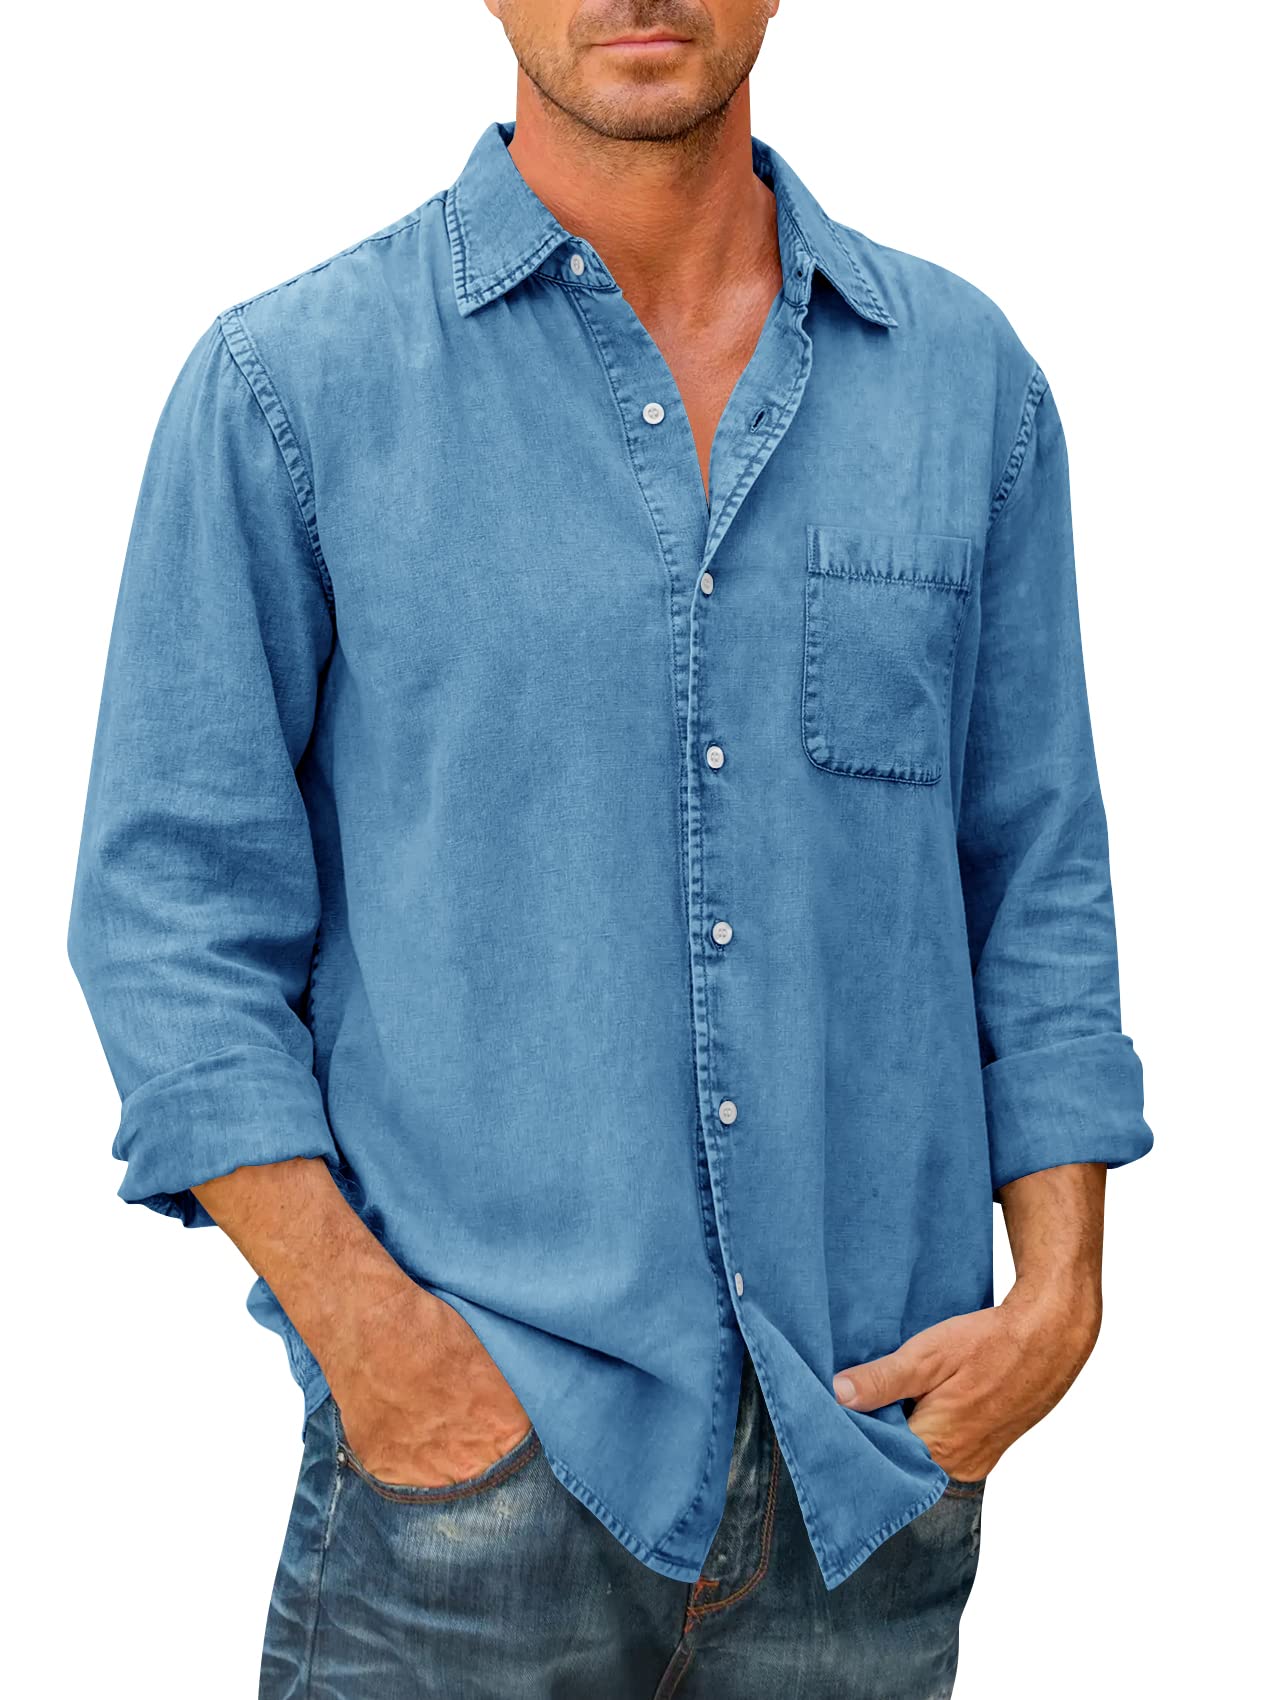 Men's High Quality Denim Shirts Long Sleeve-BUY 1 GET 1 FREE-4